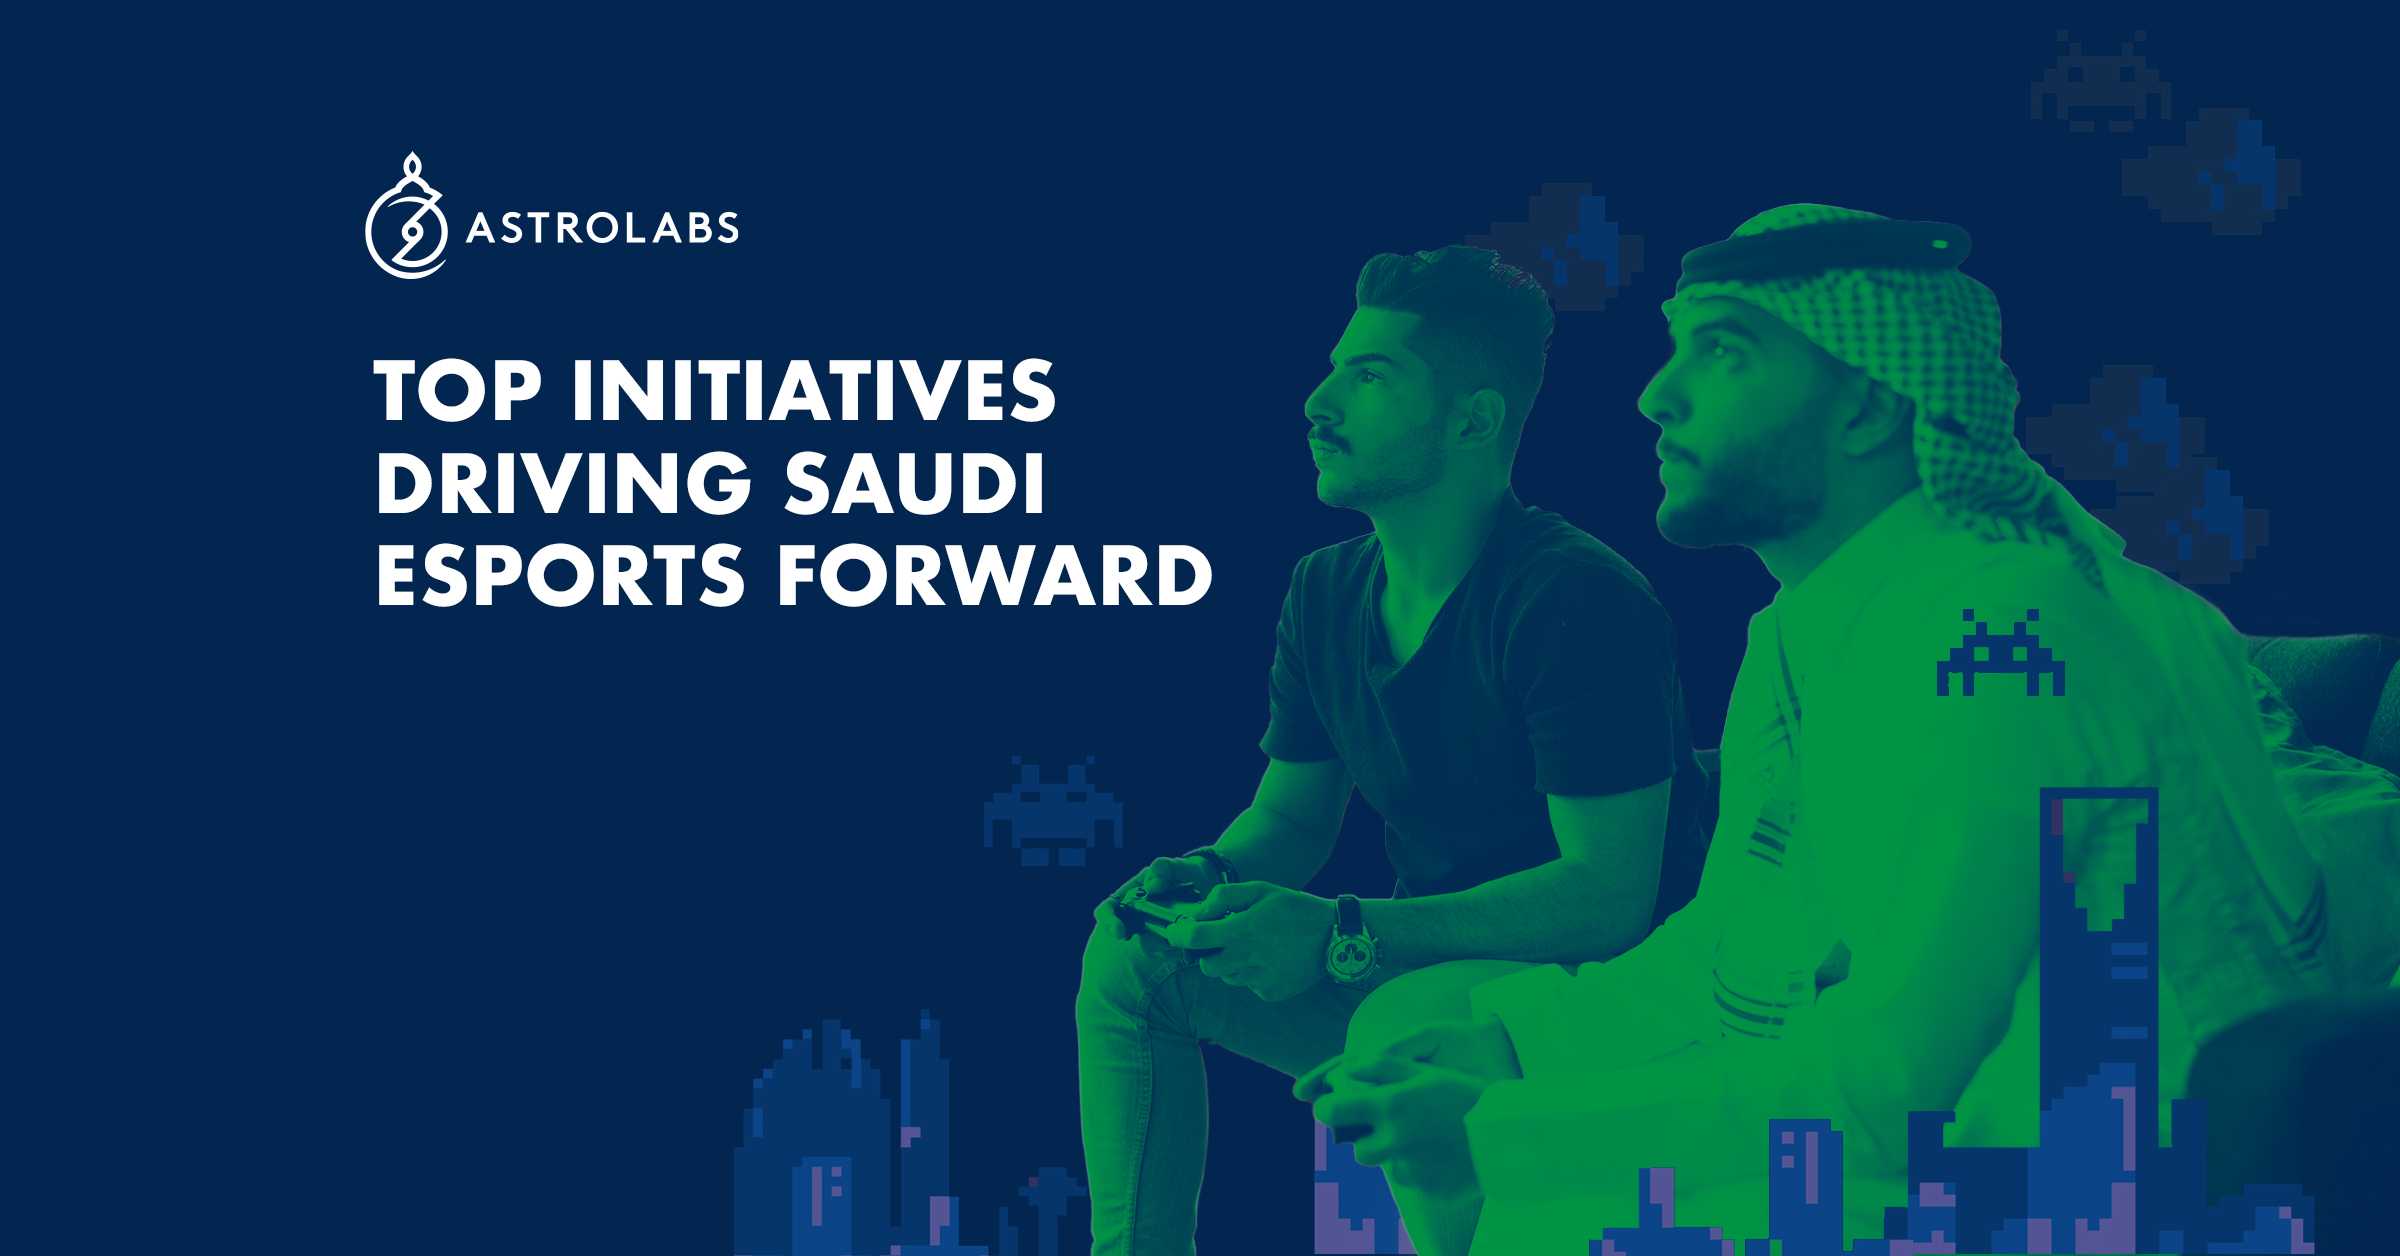 Saudi Esports - Top Initiatives Driving Gaming Forward